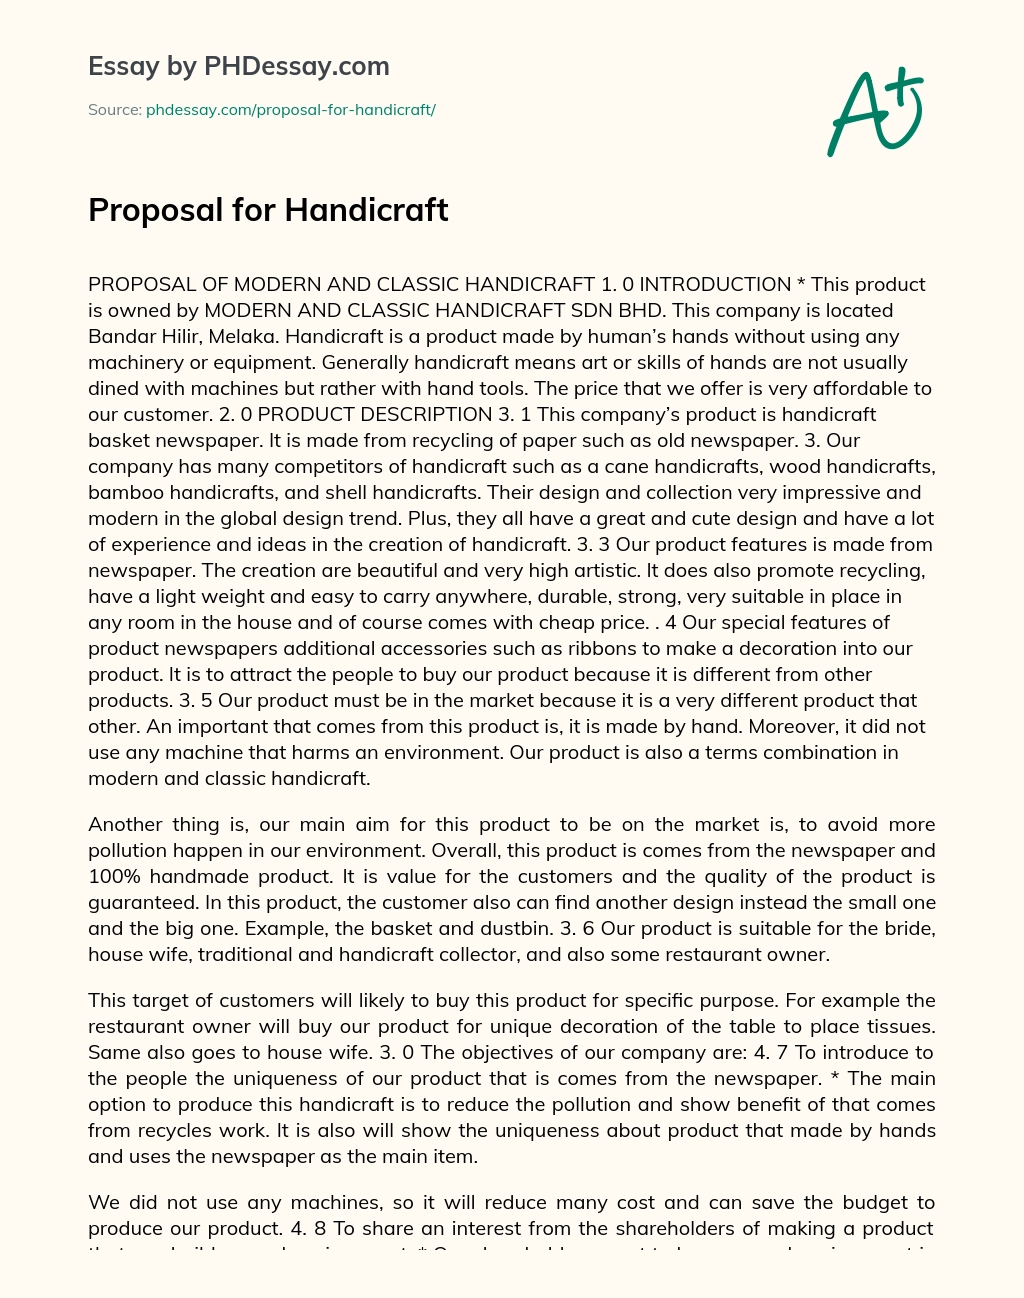 Proposal for Handicraft essay